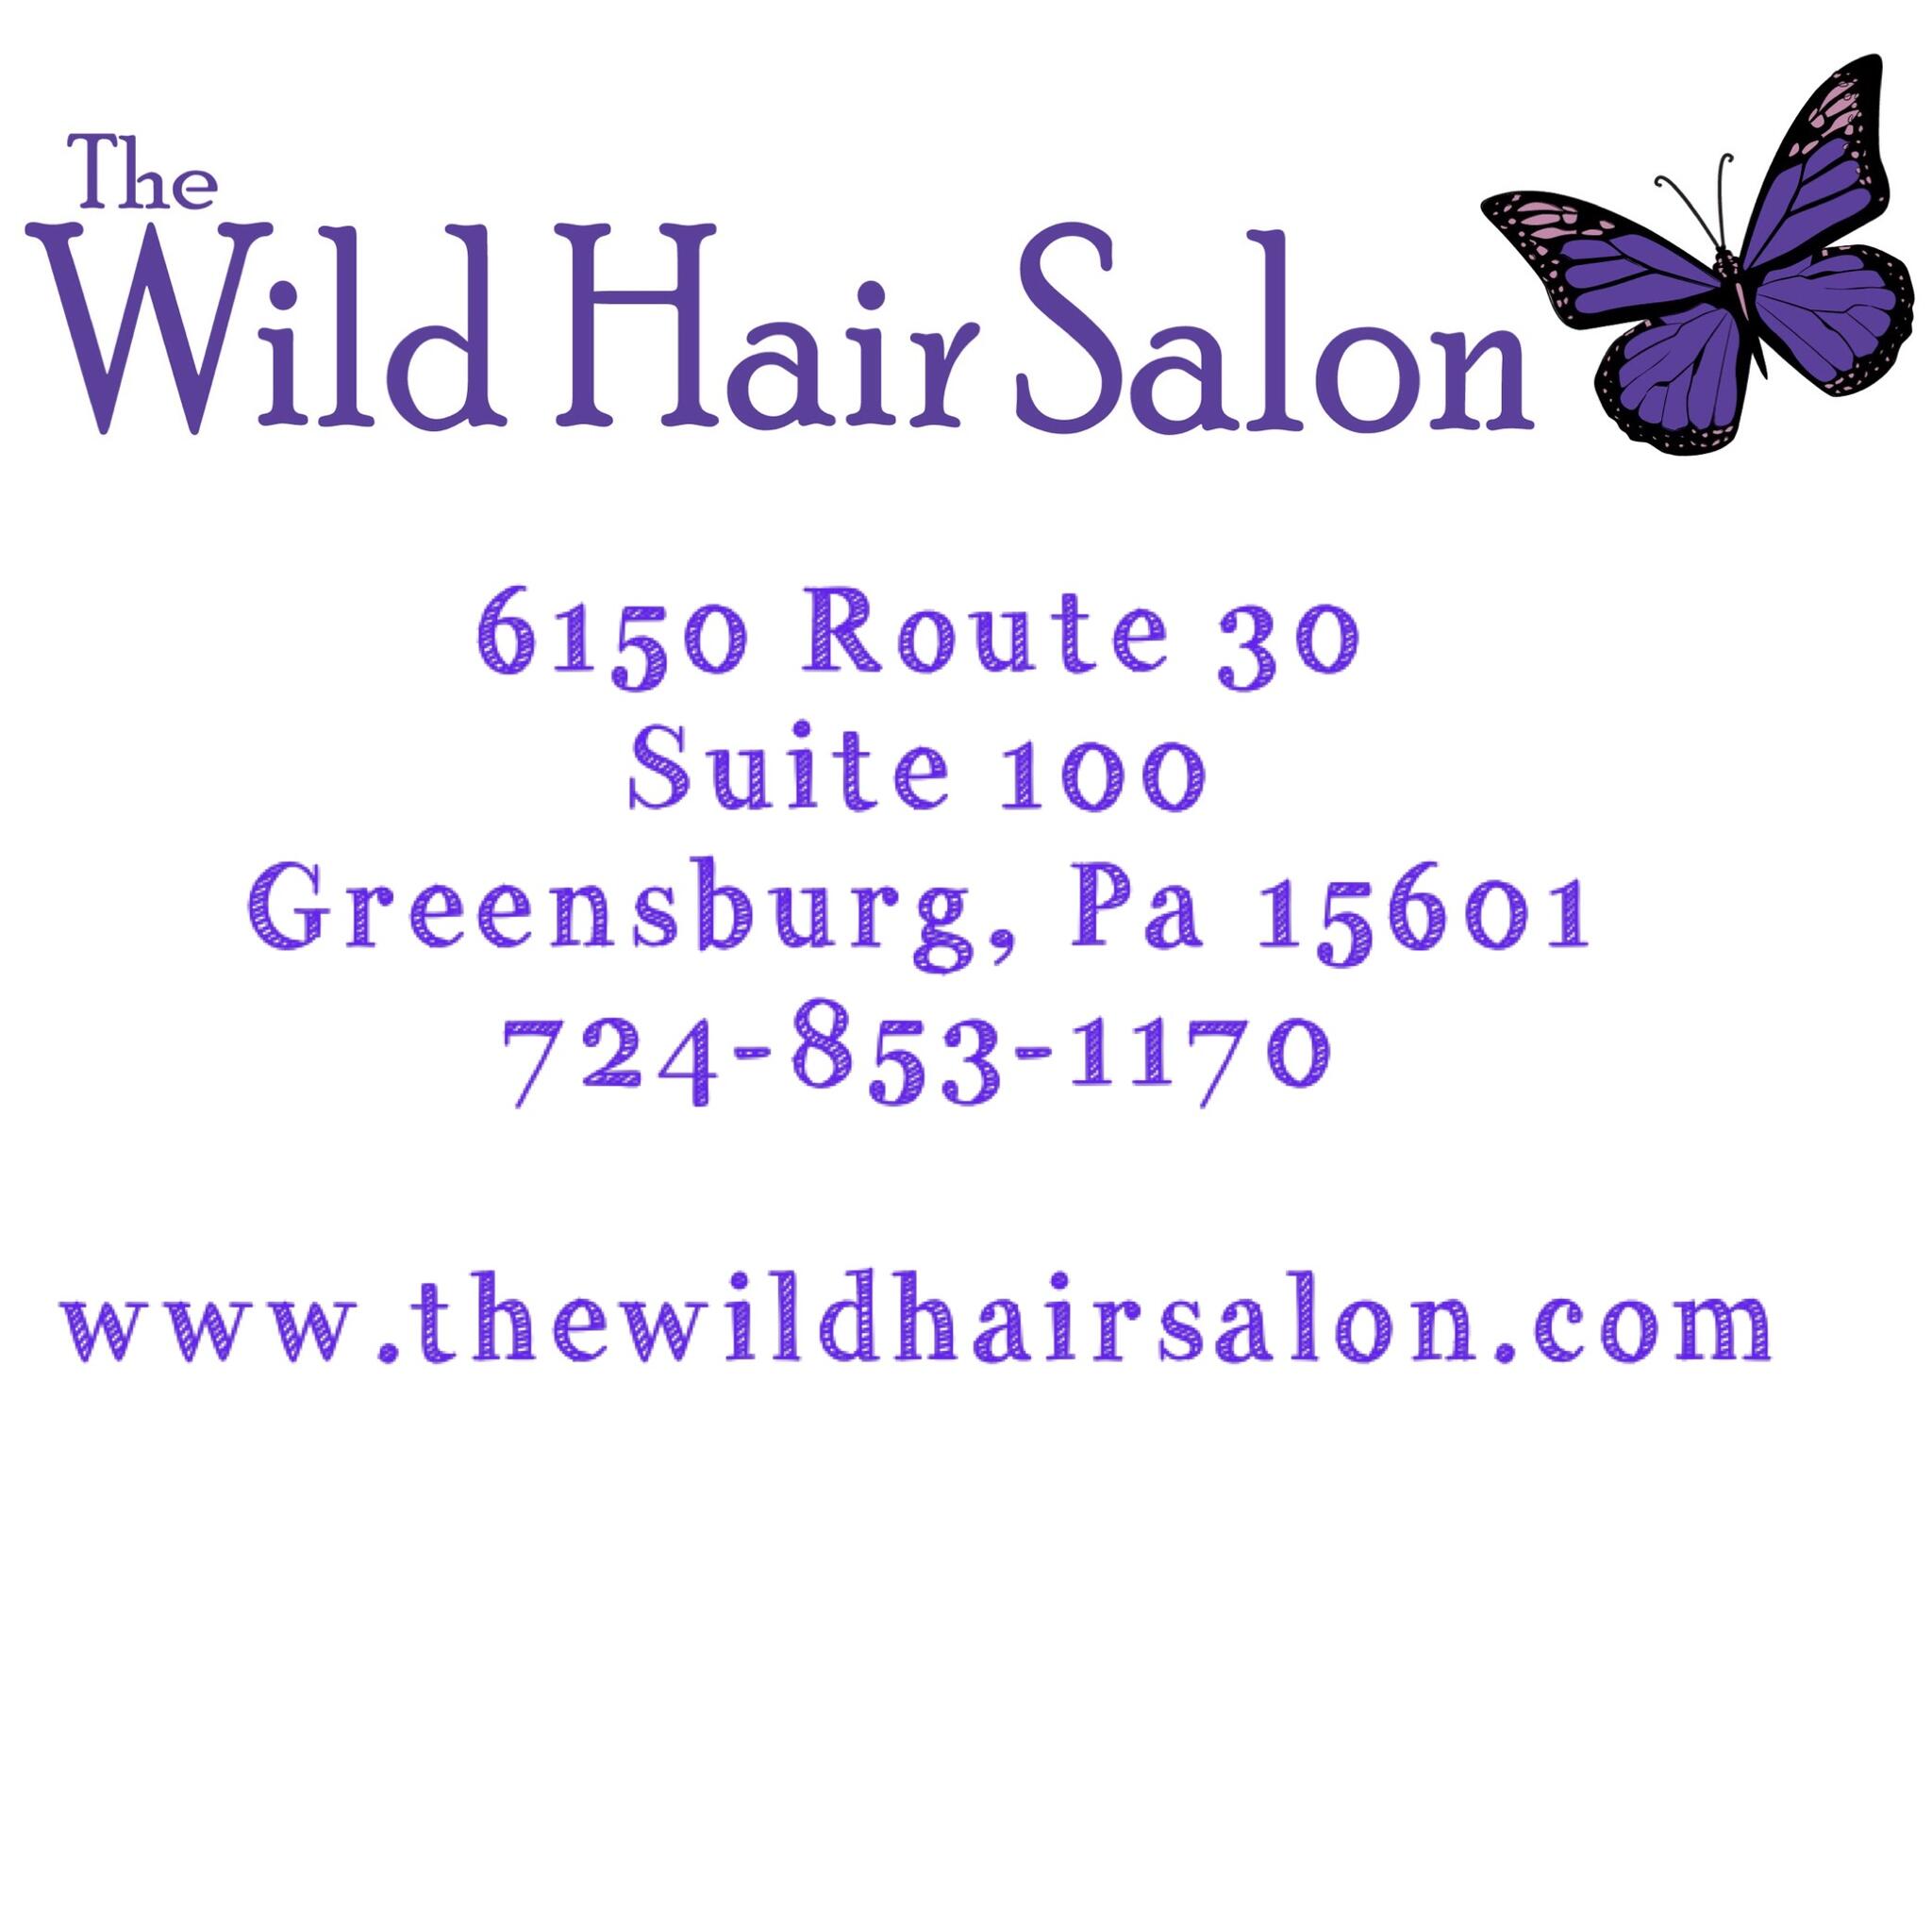 The Wild Hair Salon - Greensburg, PA